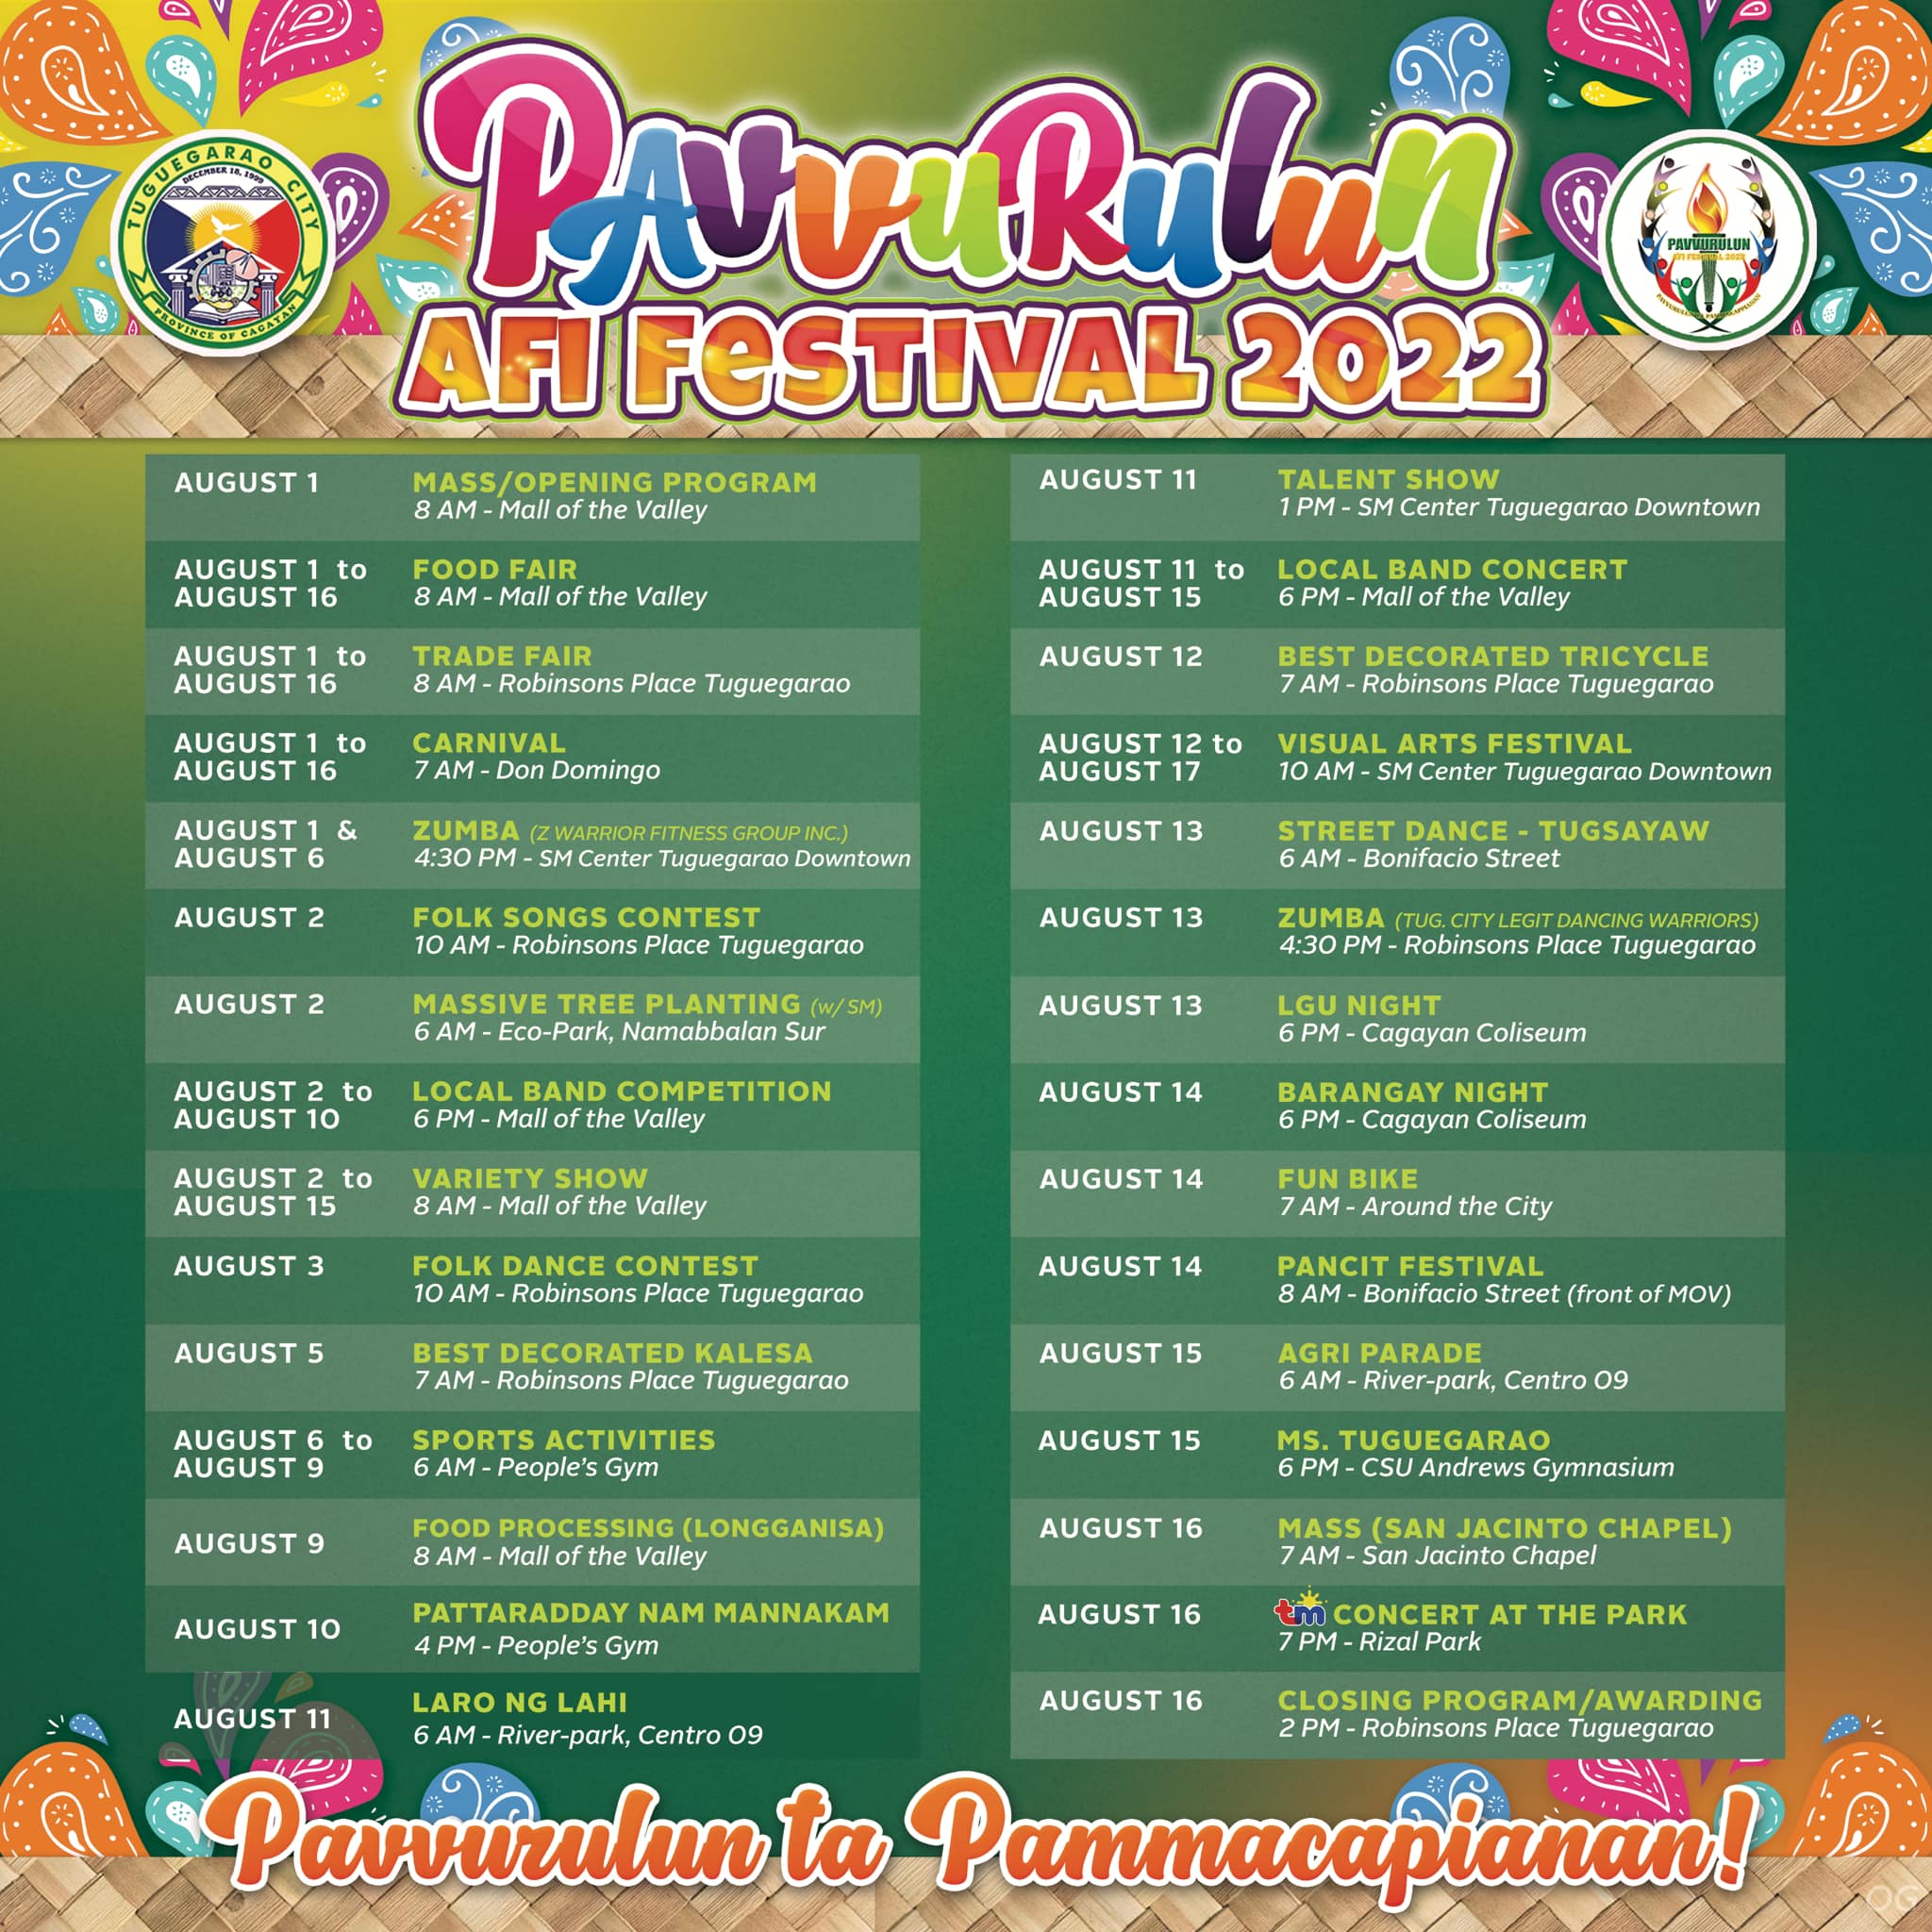 PIA Tuguegarao City all set for PavvurulunAfi Festival